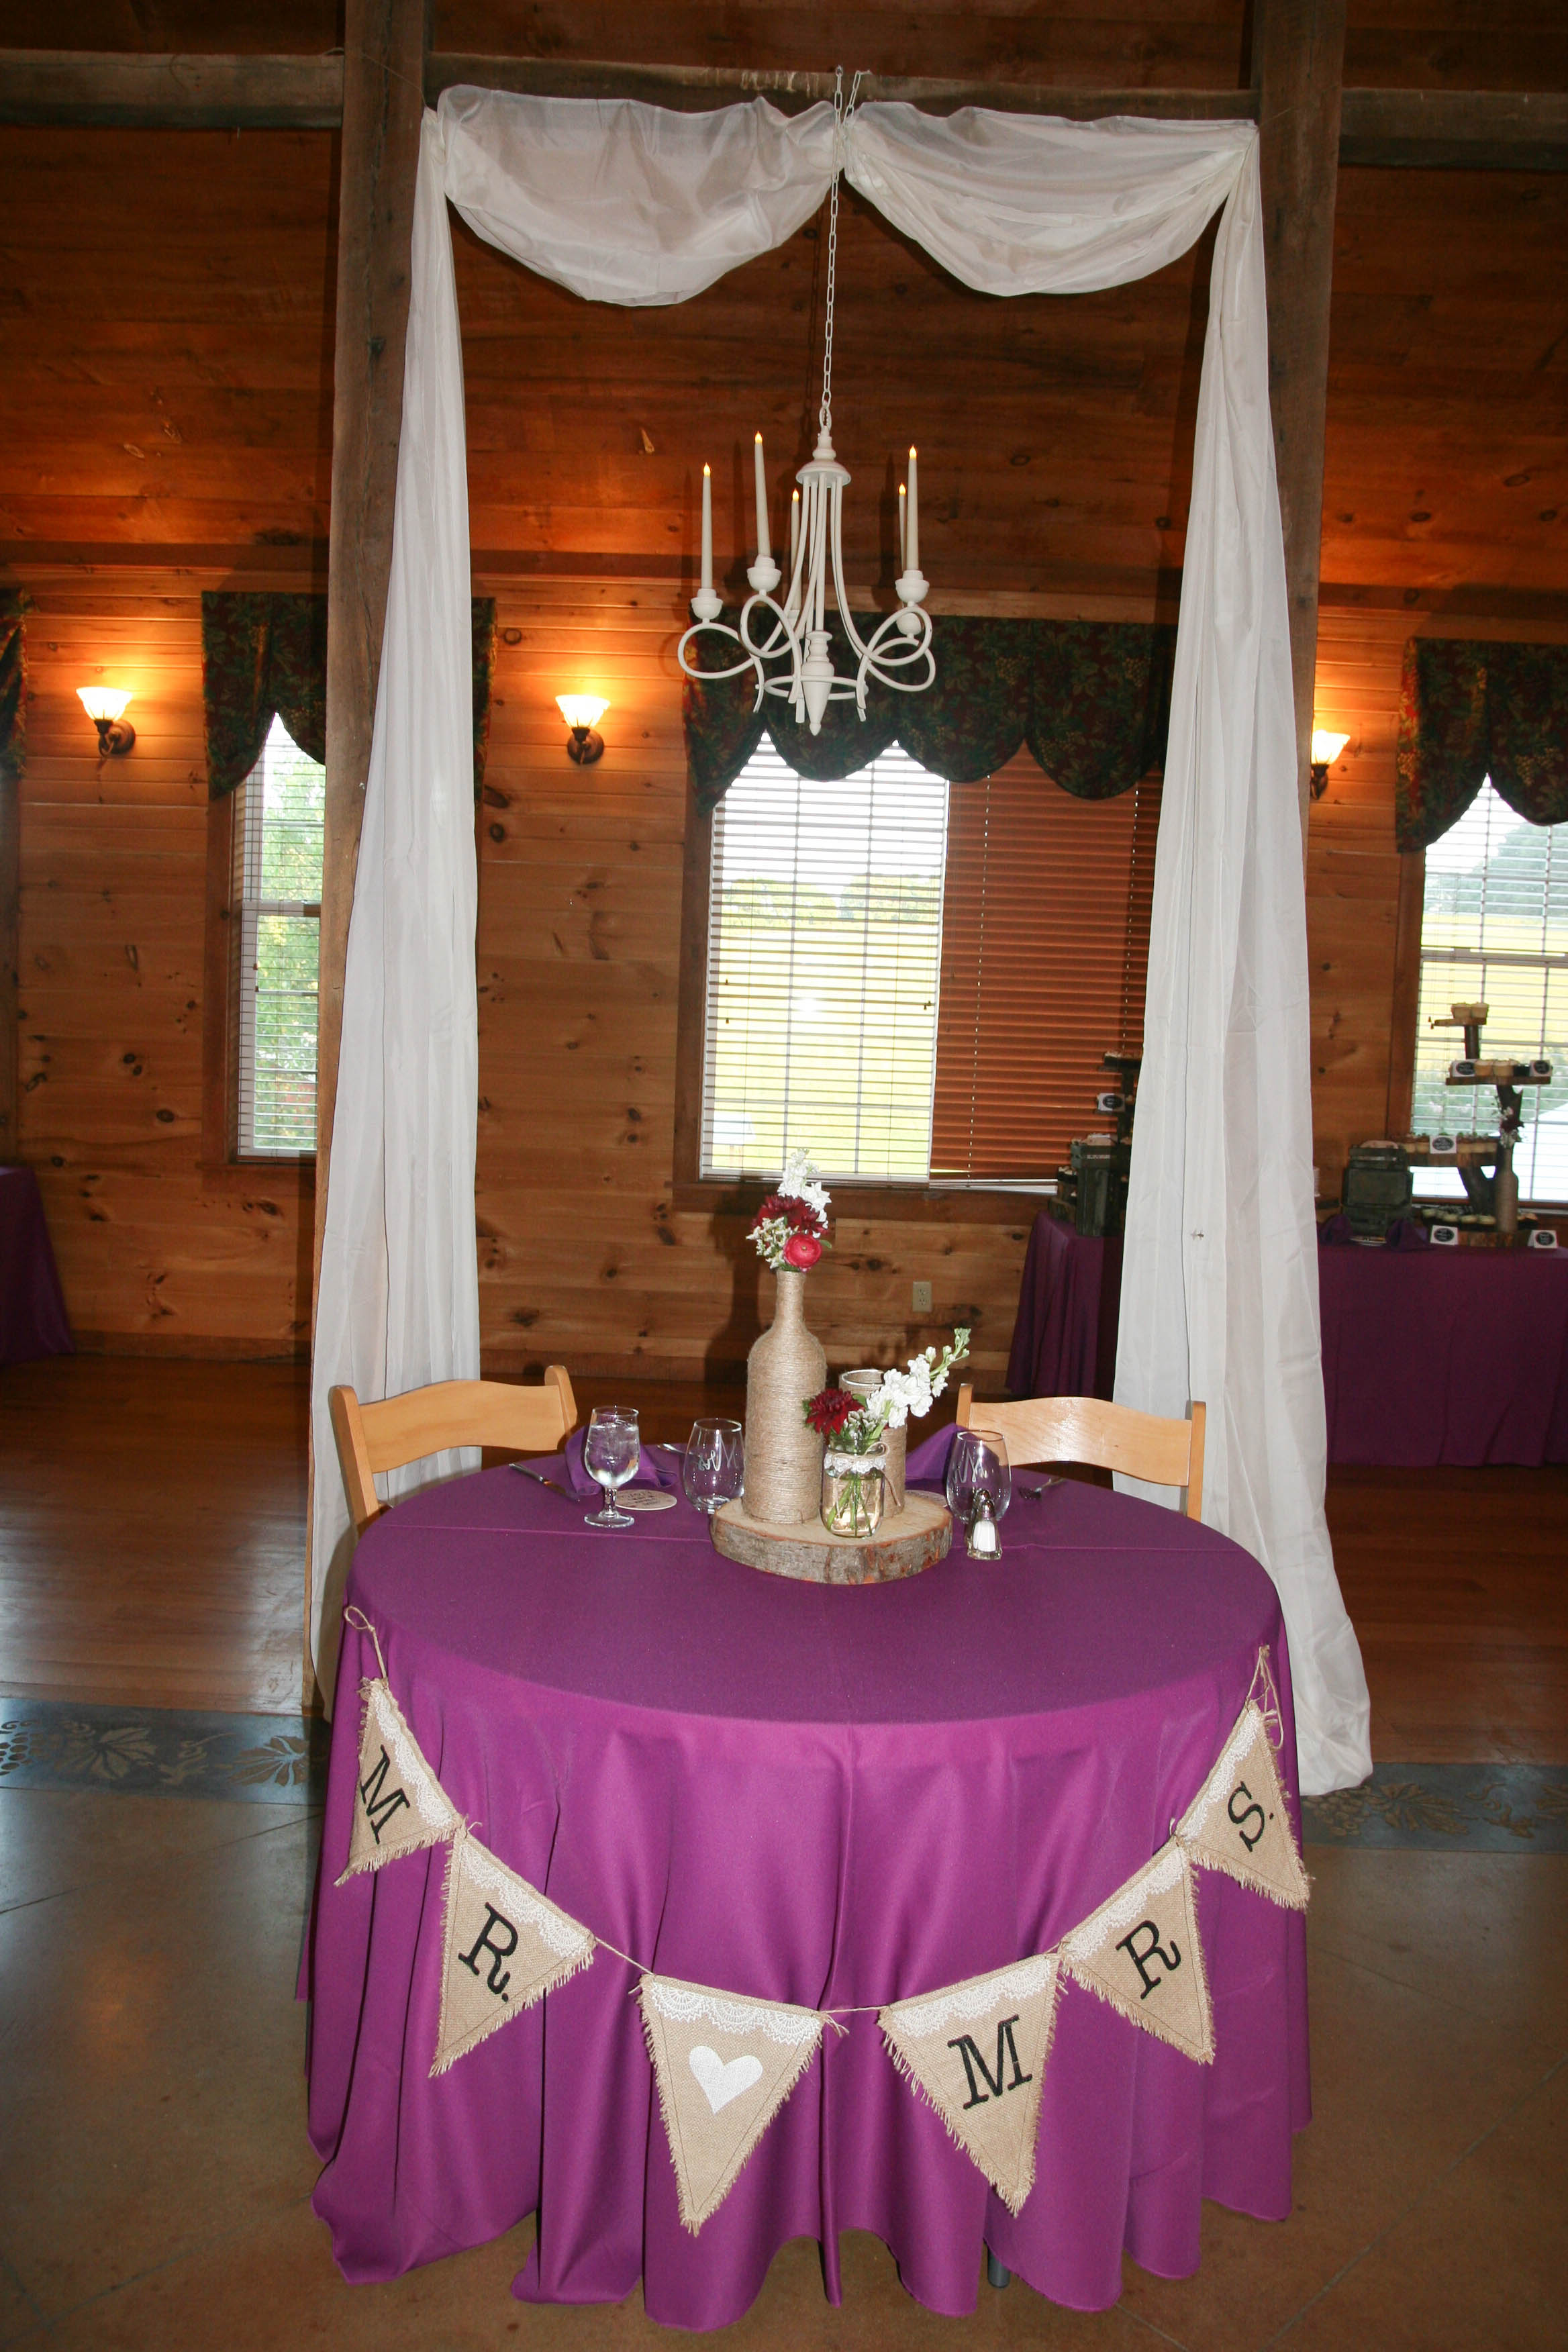 Wedding bride and groom table